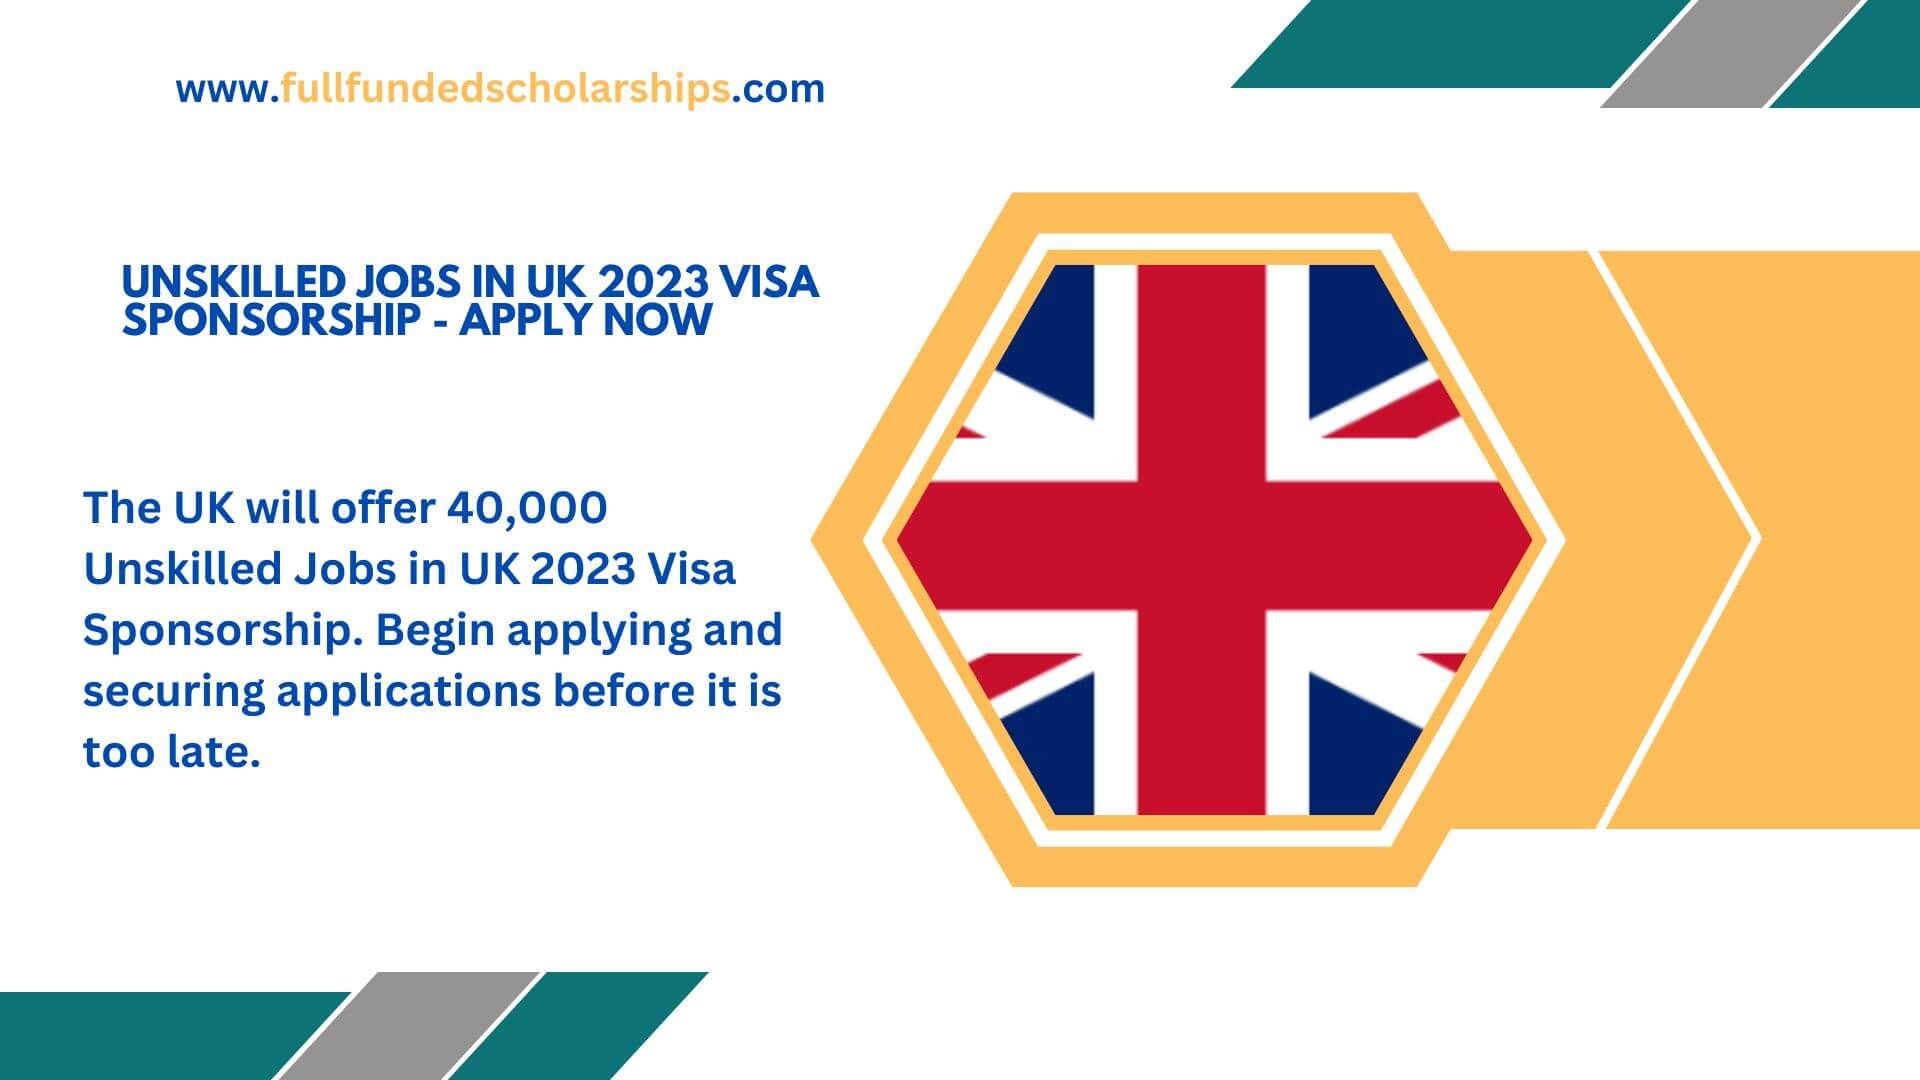 Unskilled Jobs in UK 2023 Visa Sponsorship - Apply Now